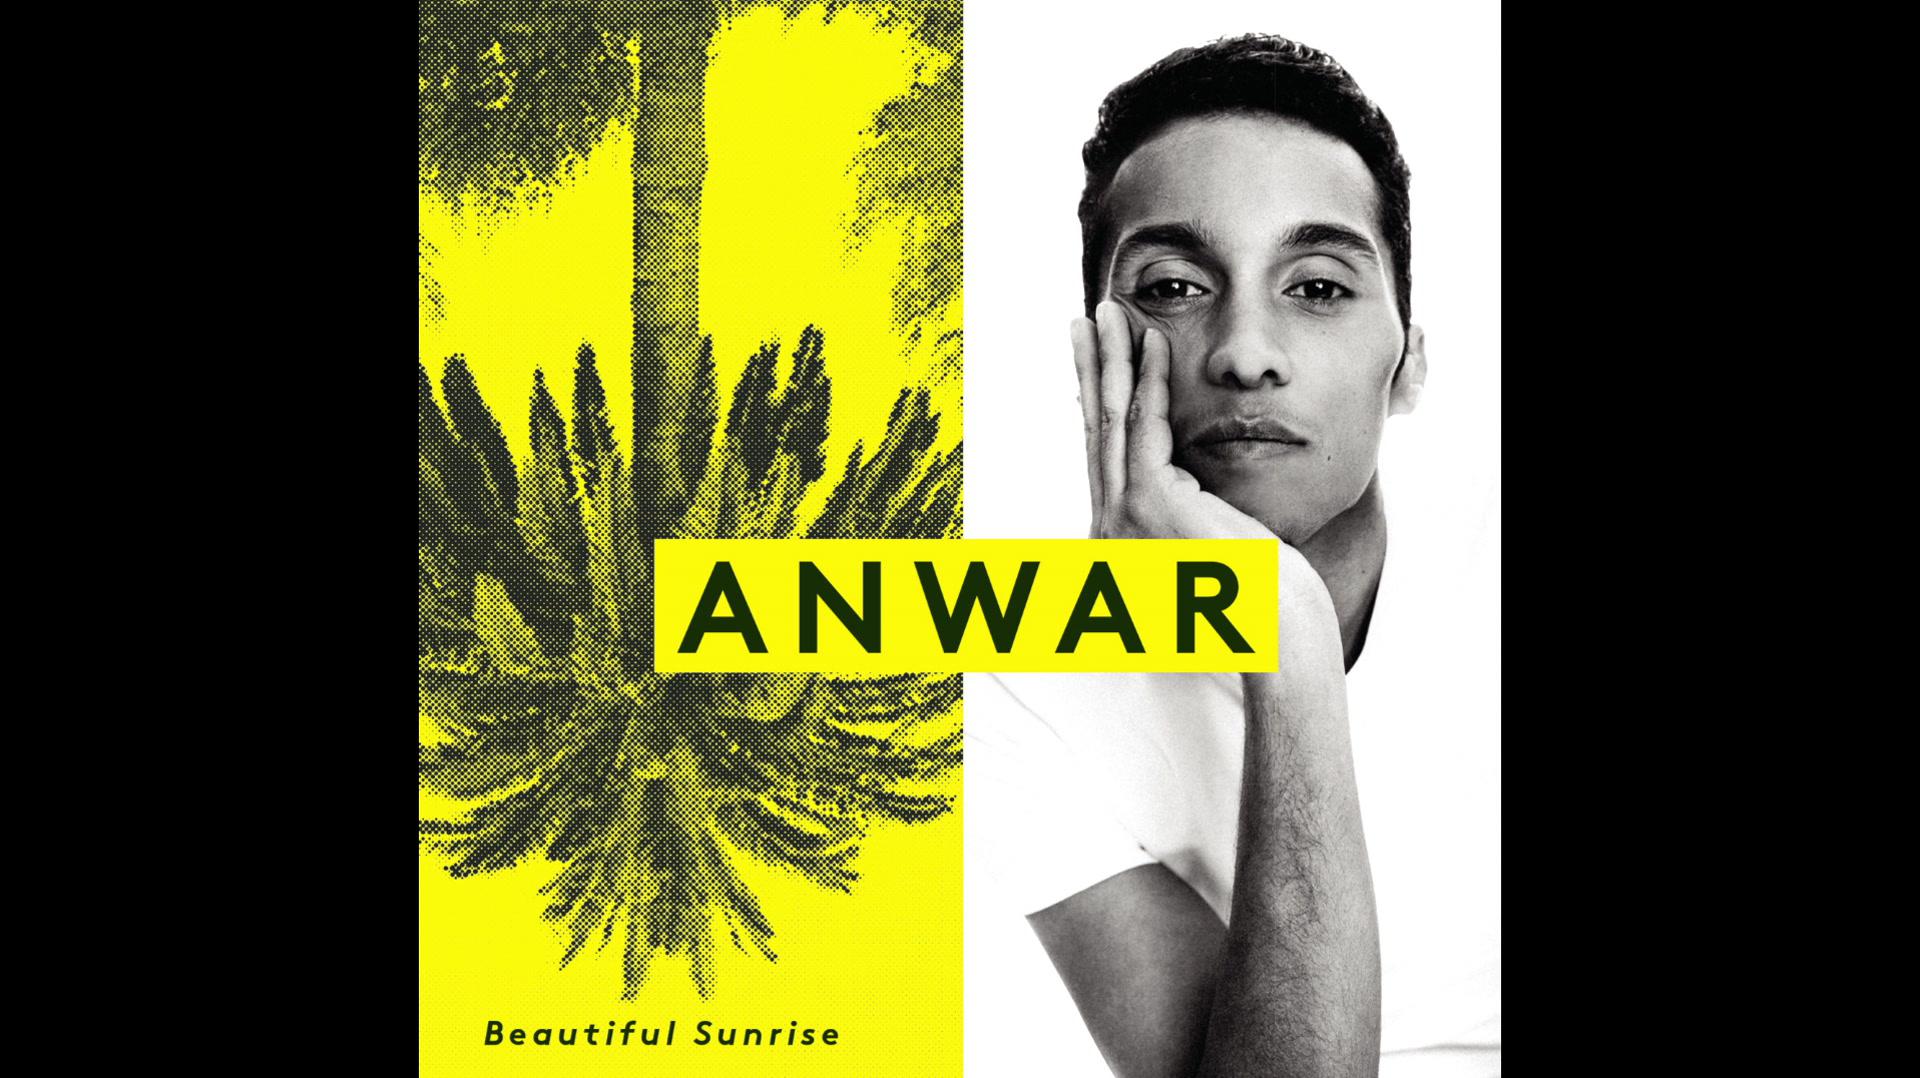 Anwar - Movin On (Audio)